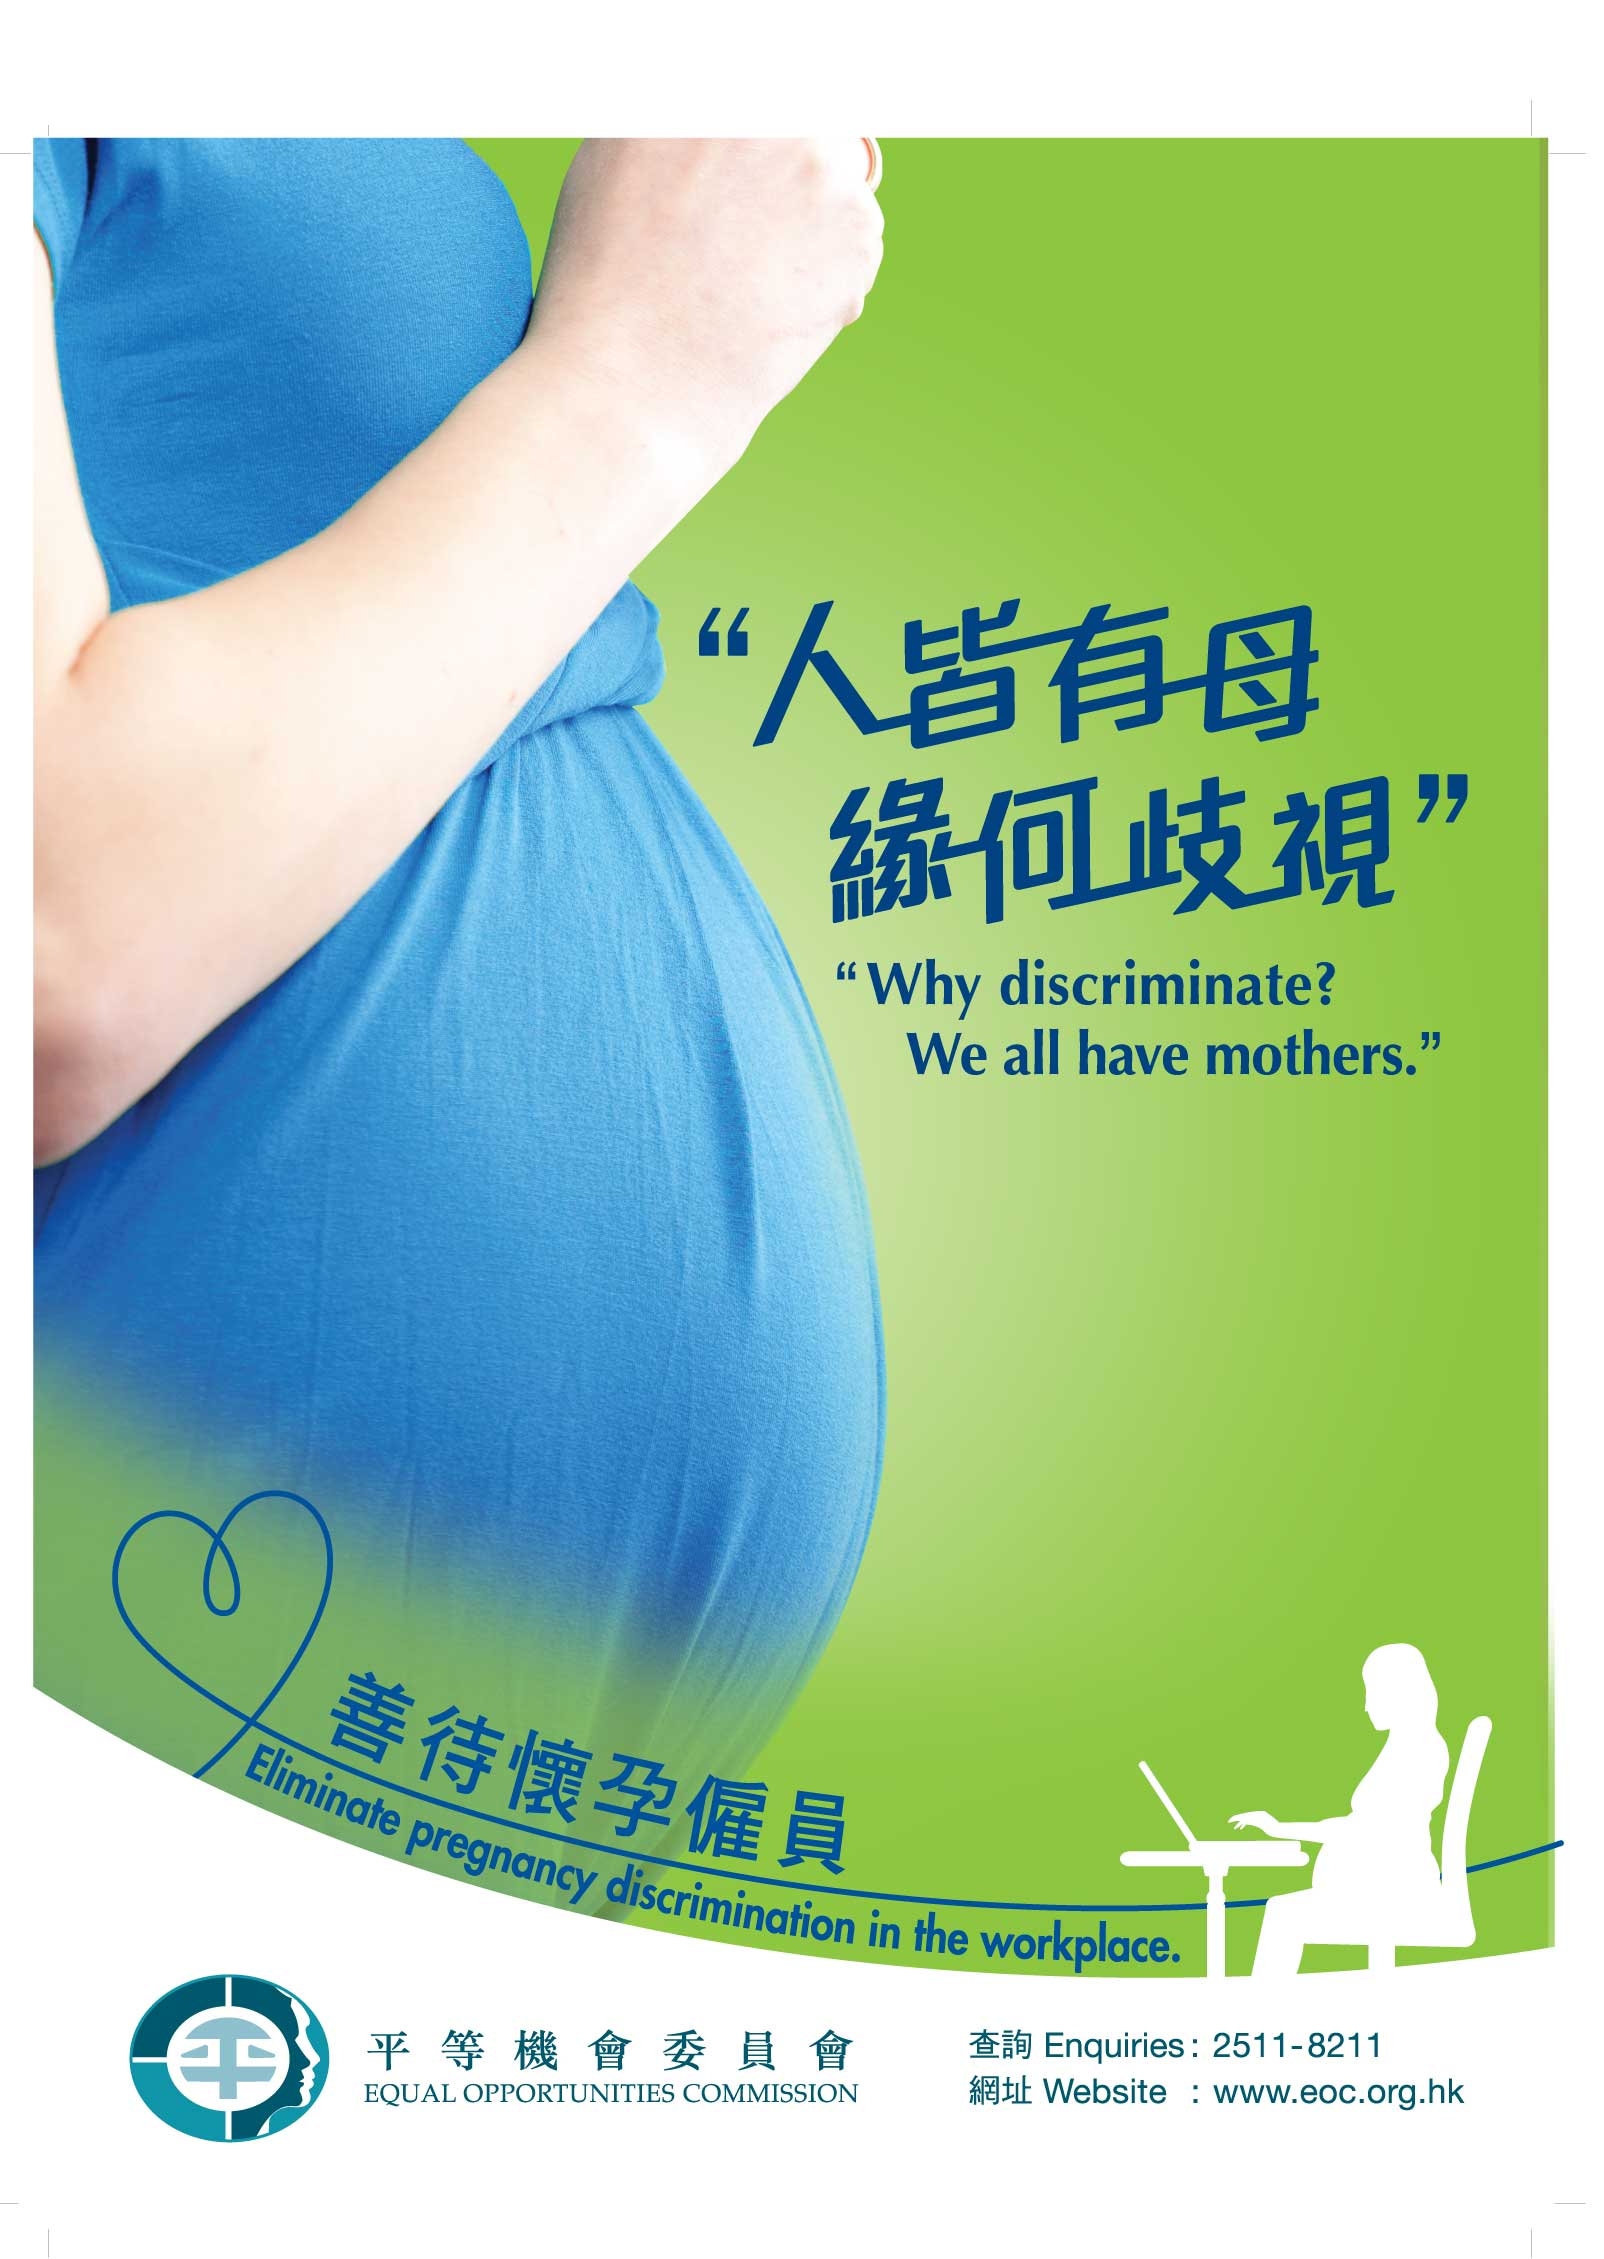 An EOC poster on pregnancy discrimination